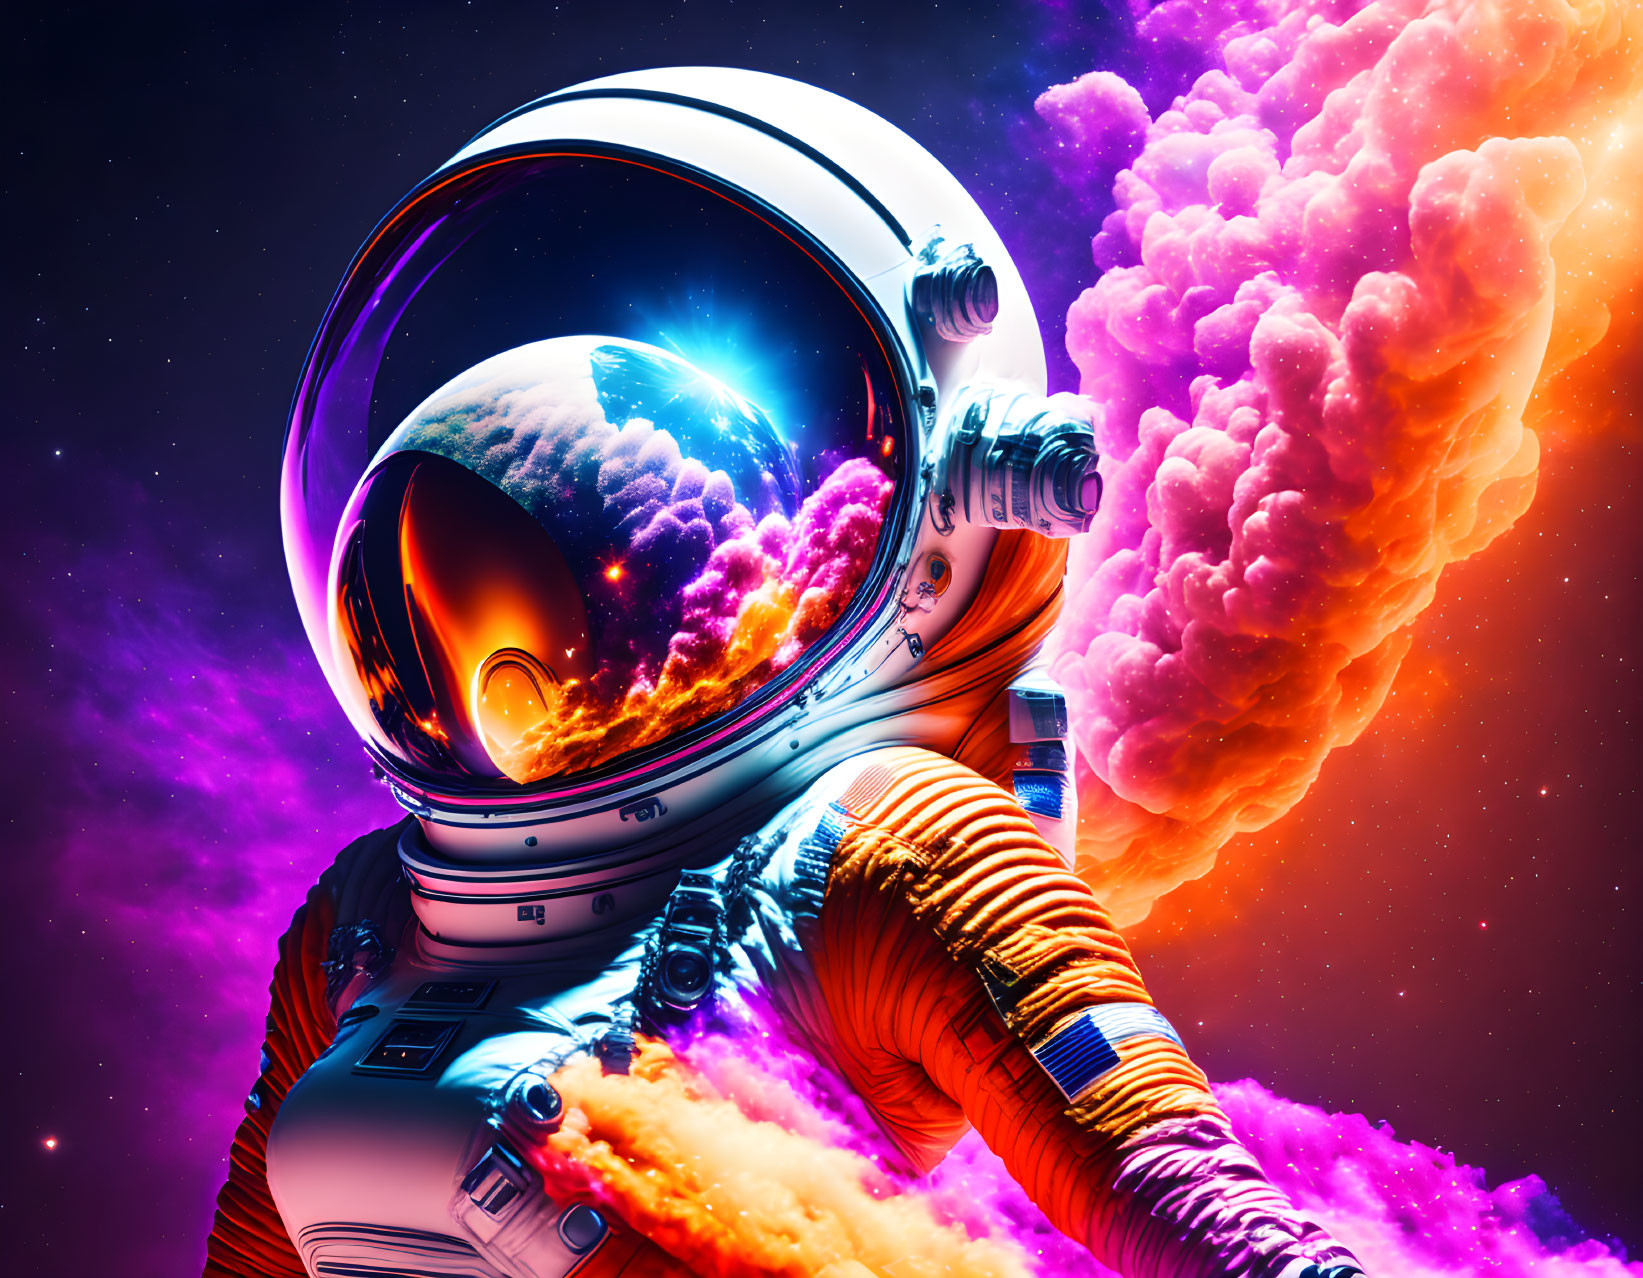 Astronaut in reflective helmet visor in cosmic nebulae